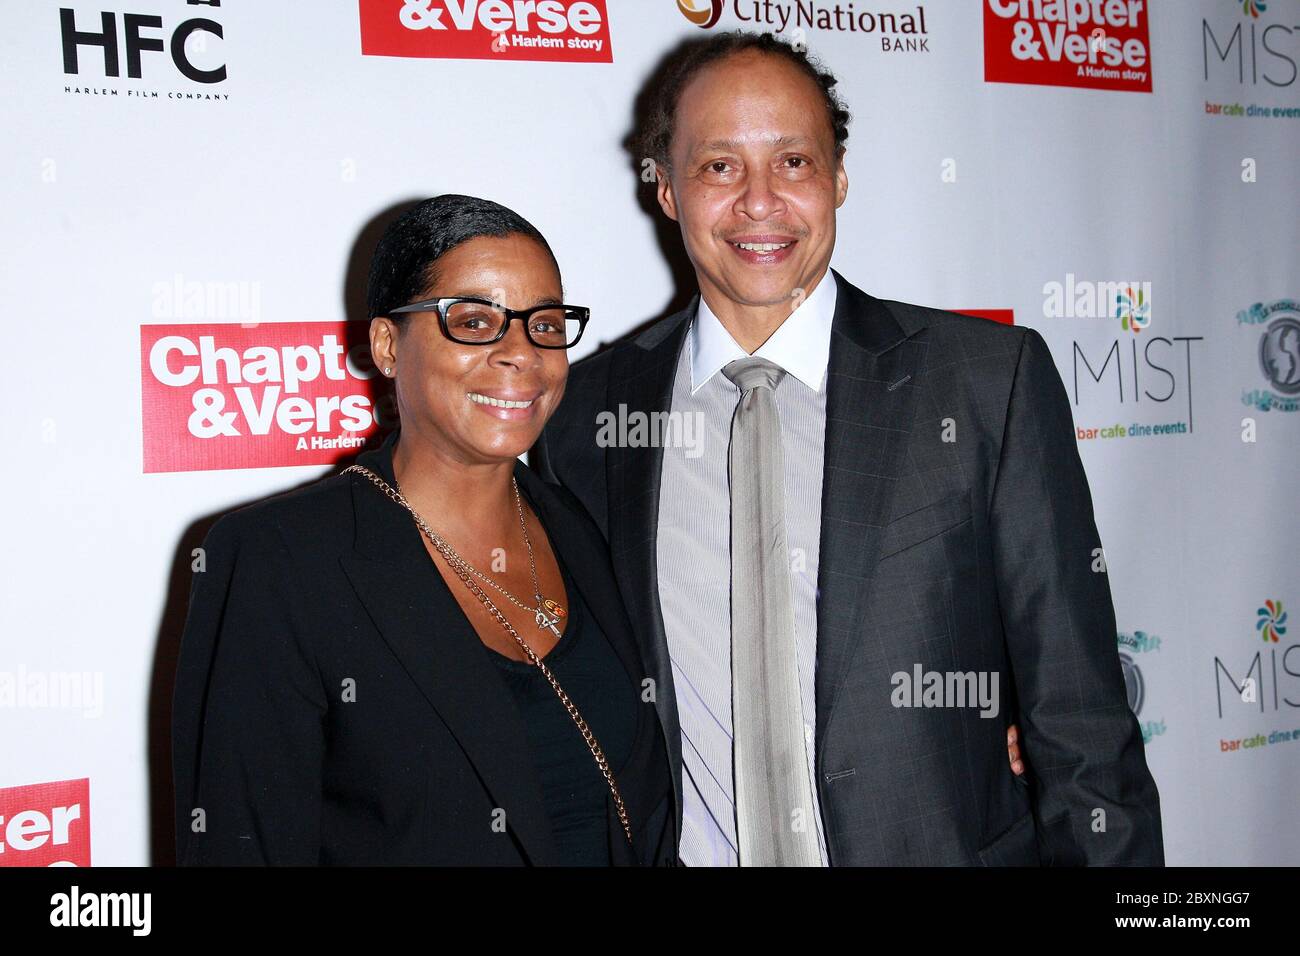 New York, NY, USA. 31 January, 2017. Robin Newland, Jamal Joseph at the CHAPTER & VERSE Premiere at MIST Harlem. Credit: Steve Mack/Alamy Stock Photo